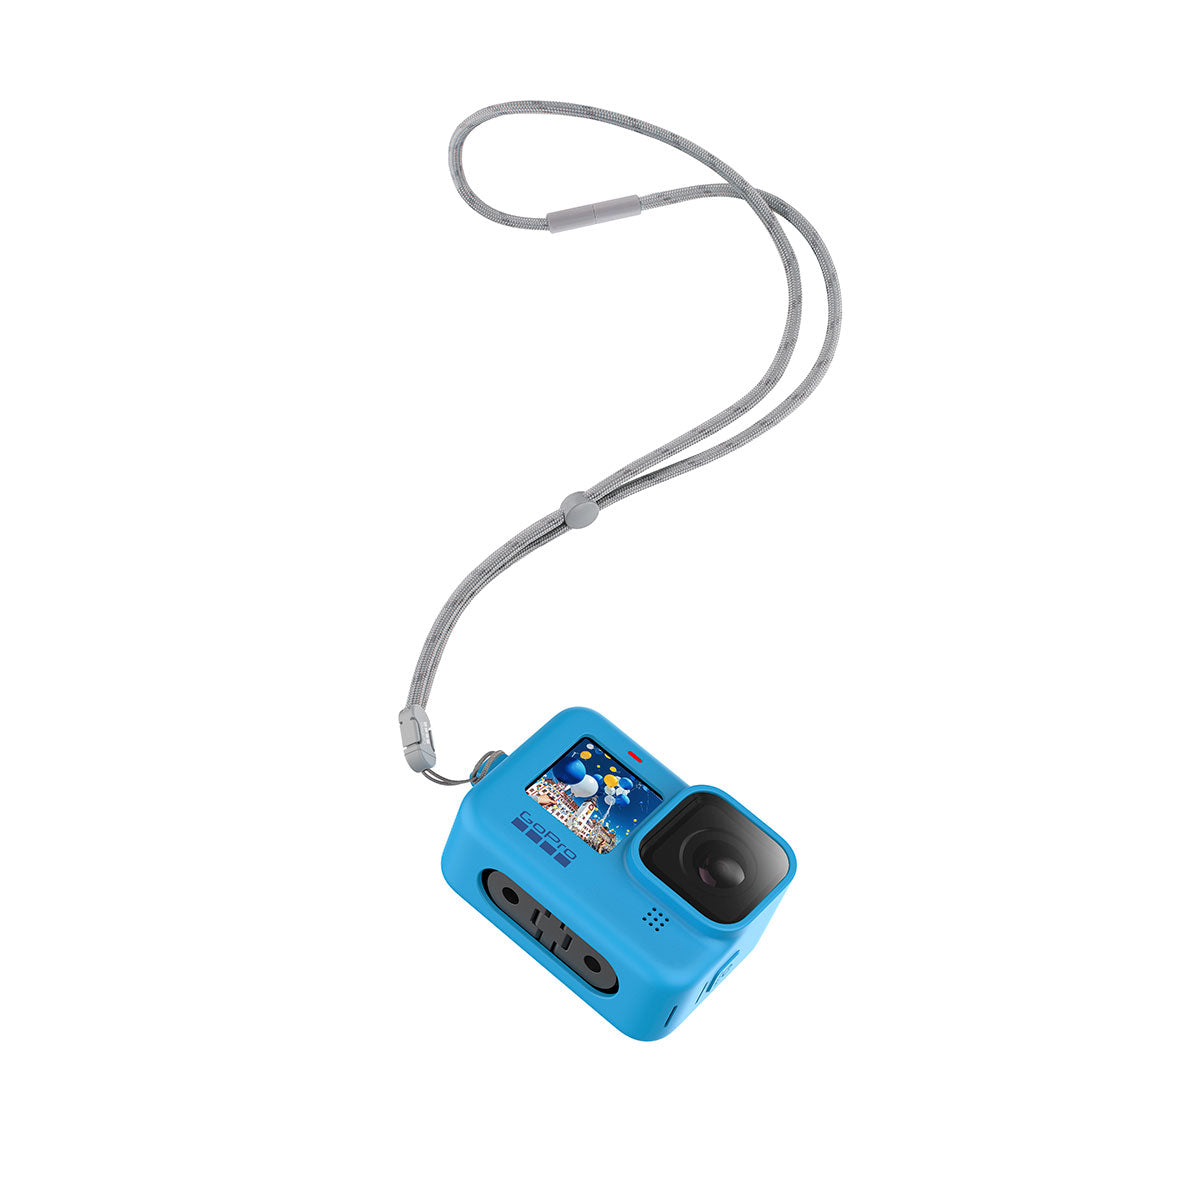 GoPro Sleeve + Lanyard 矽膠護套頸繩 運動相機配件 Microworks Online Store